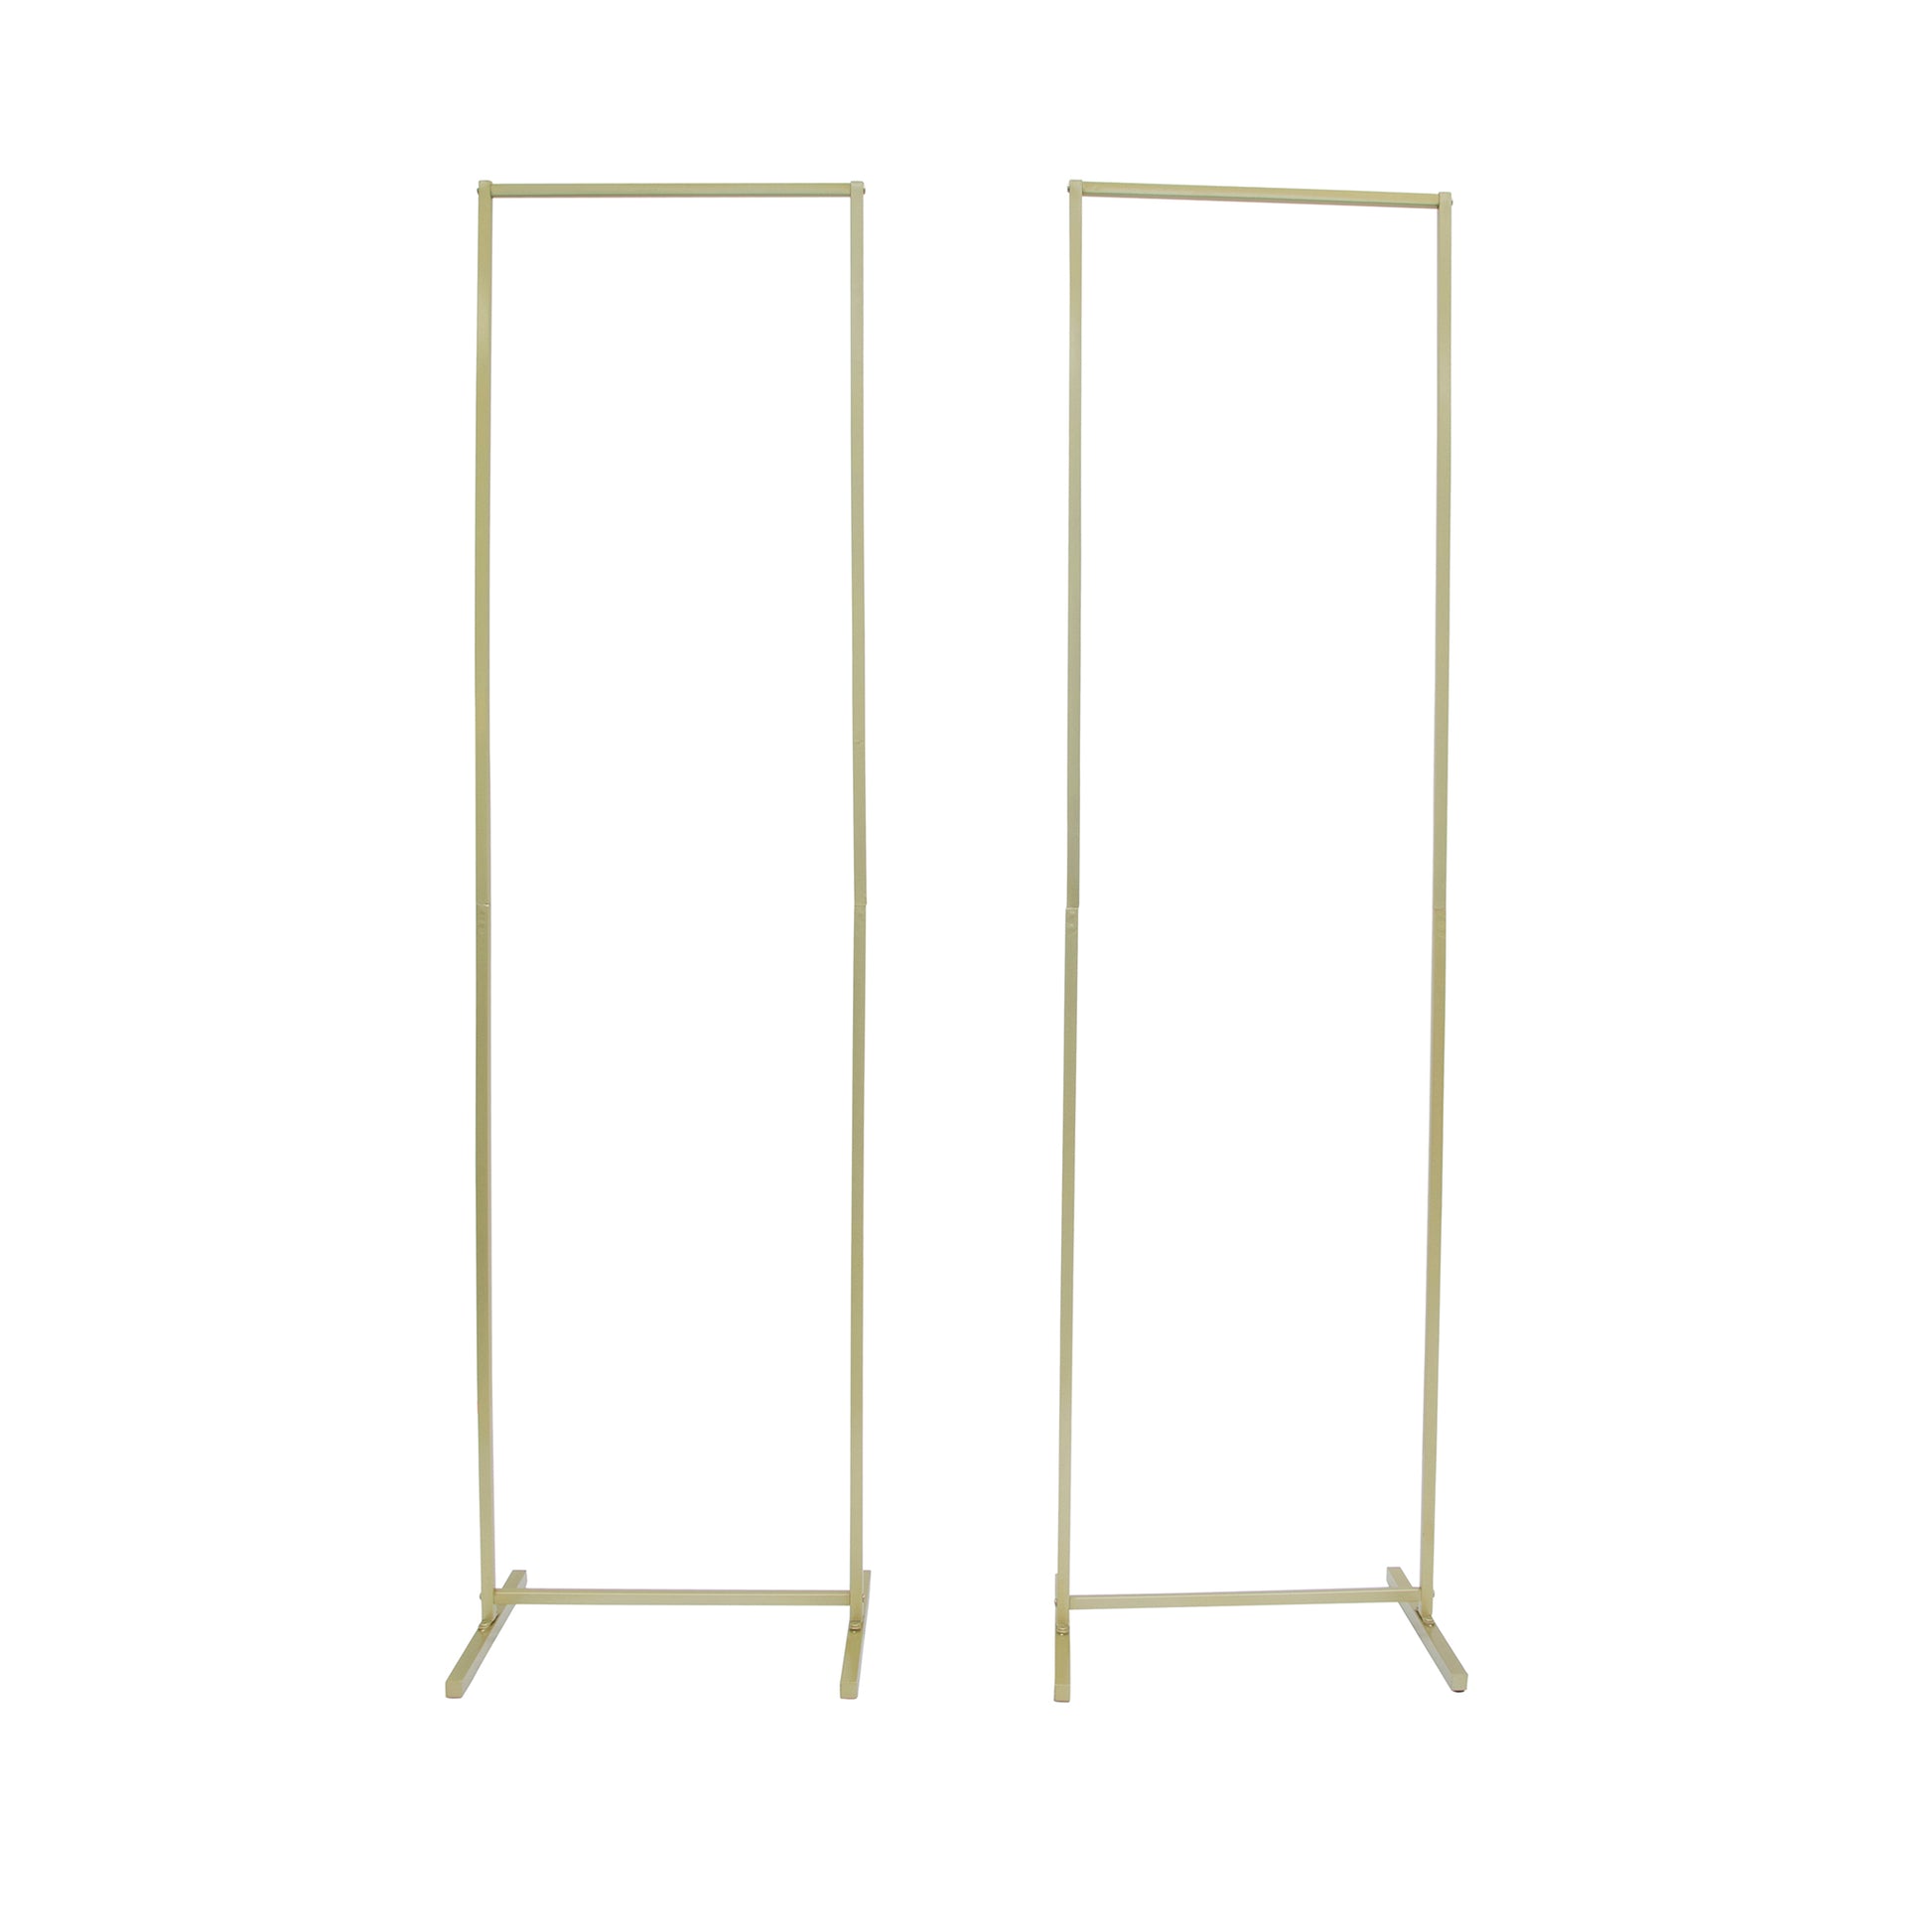 2 pcs 7.5 ft Rectangular Arch Backdrop Frame Stands - Gold